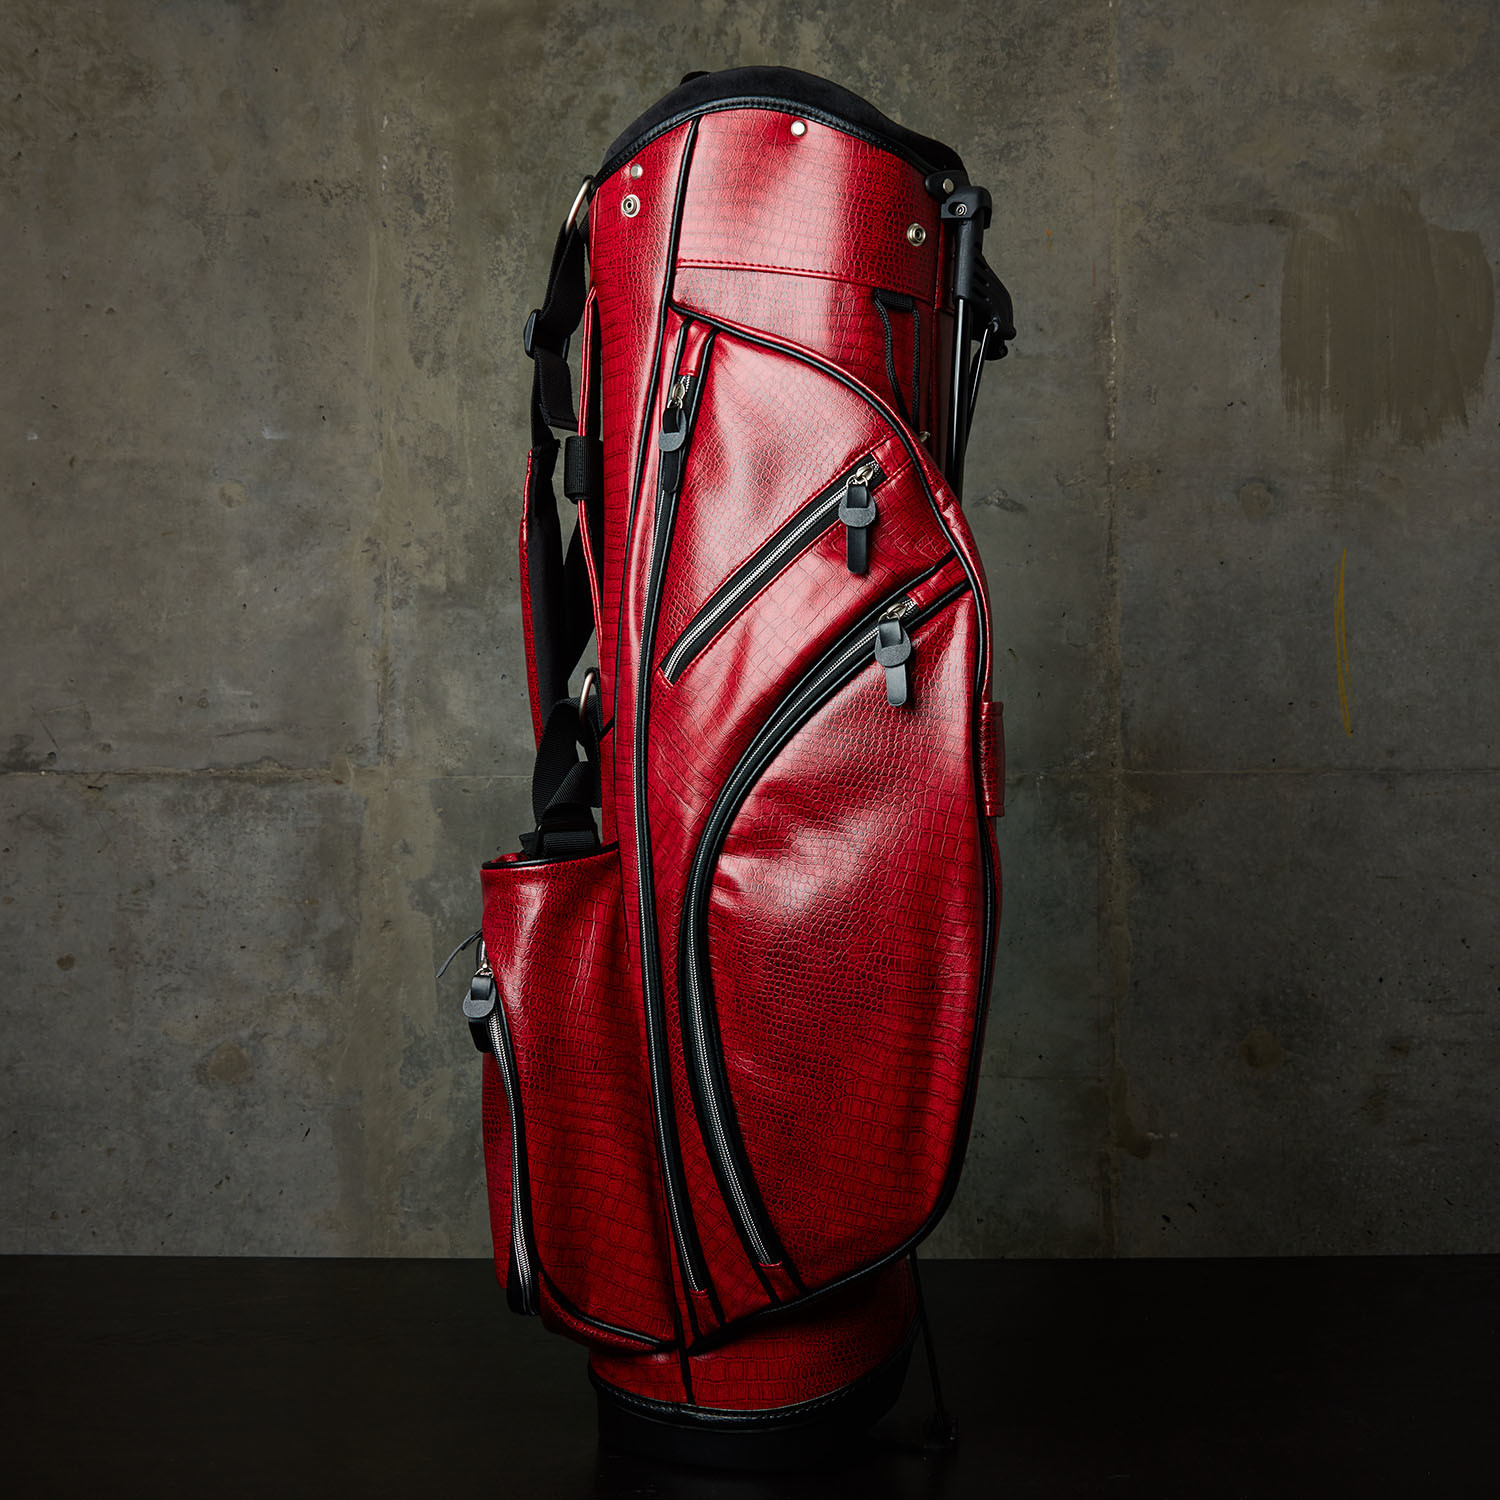 Buy Carpedision Golf Stand Bag Red Color C3